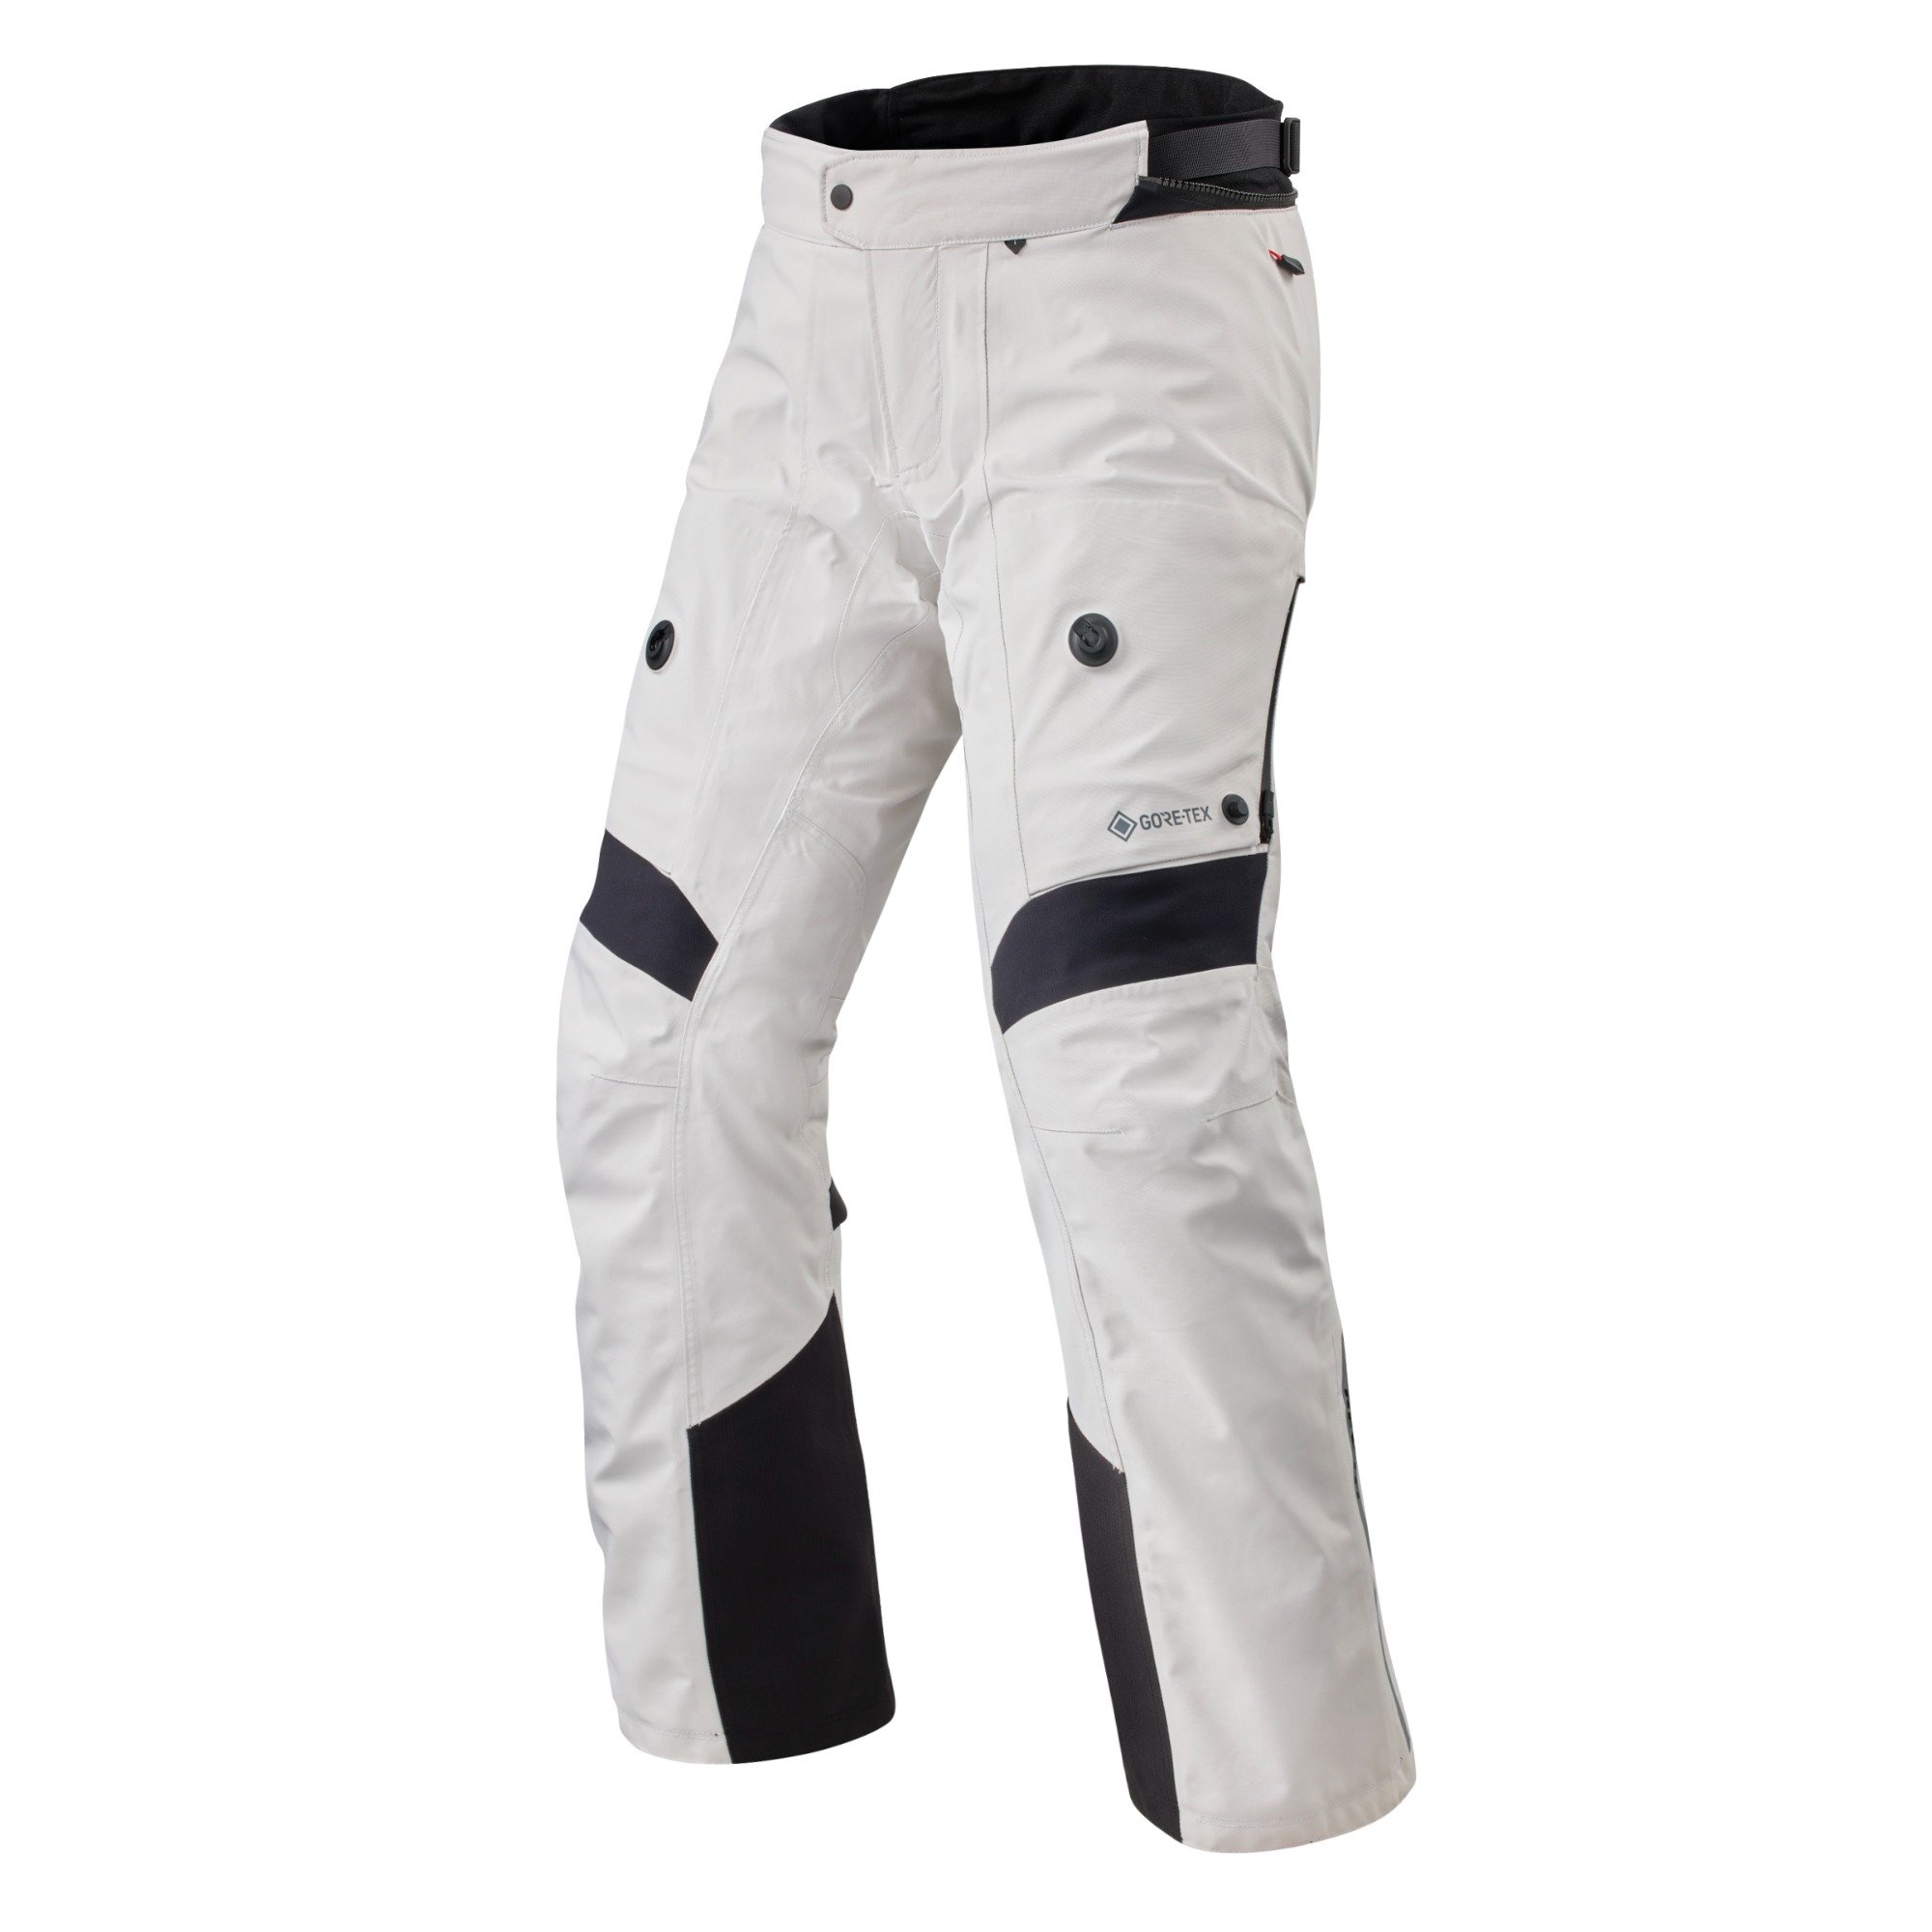 Image of REV'IT! Pants Poseidon 3 GTX Silver Black Standard Motorcycle Pants Size M ID 8700001362597